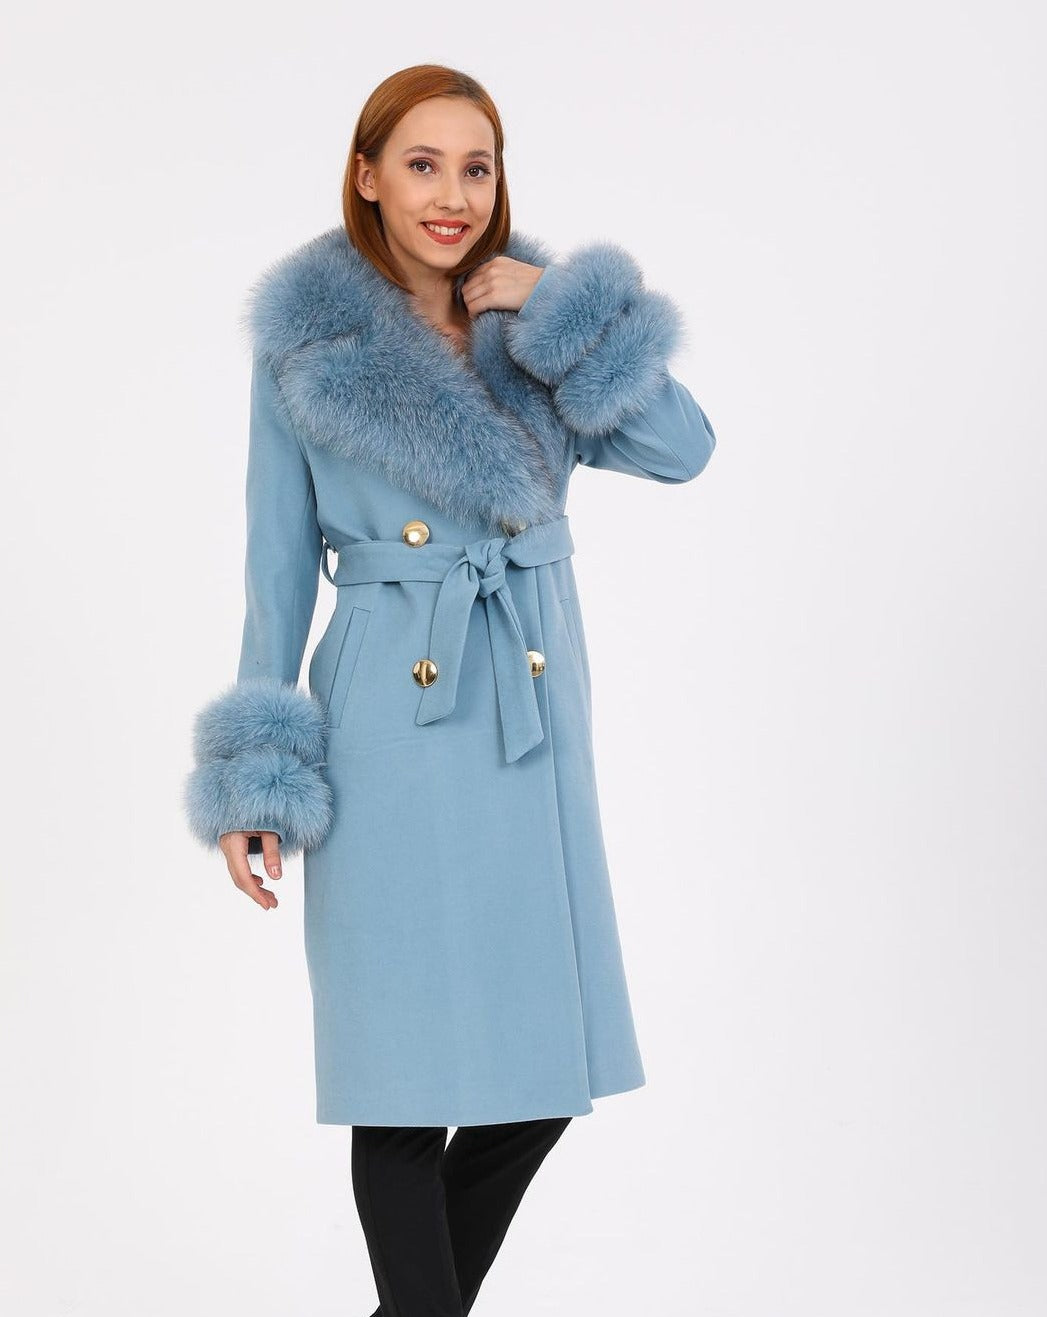 Elegant GLORIA LIGHT BLUE Coat with Luxurious Fox Fur Collar and Cuffs